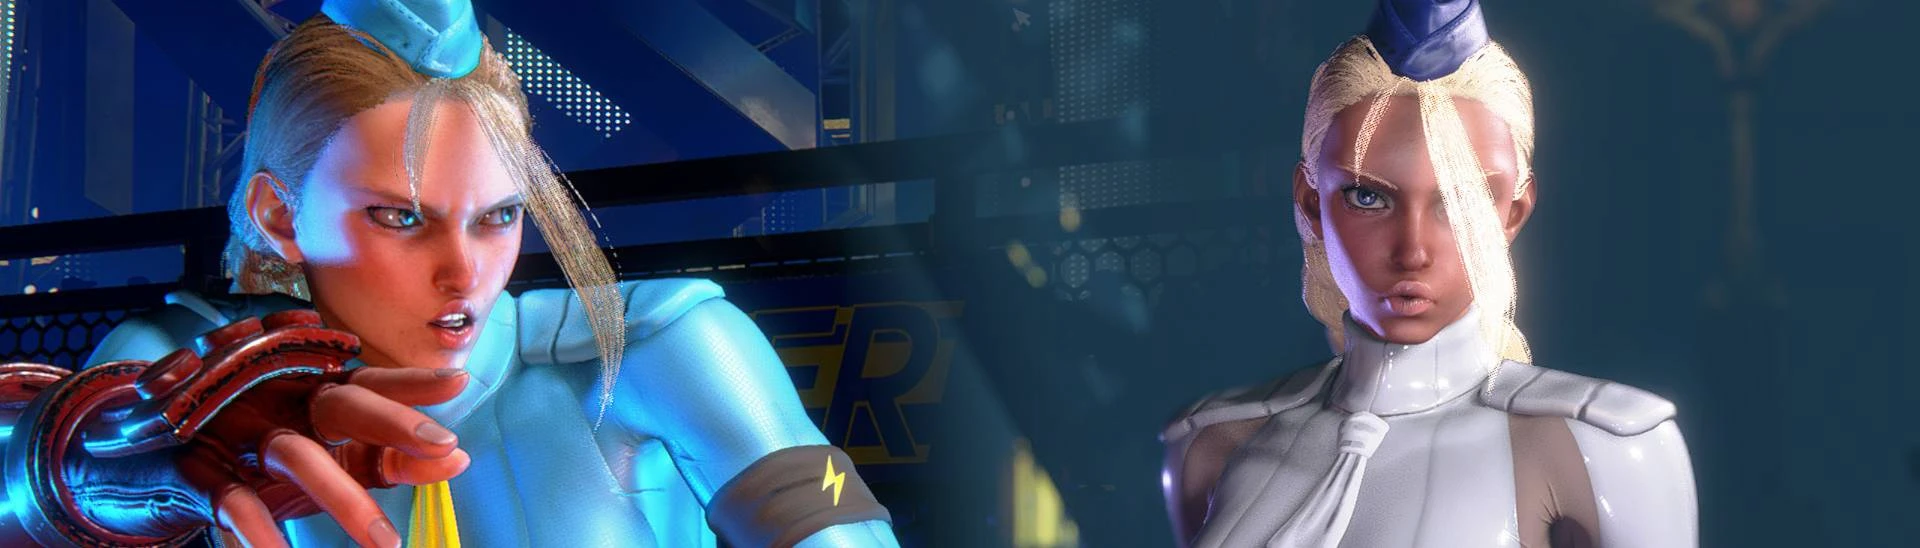 Killer Bee Cammy (Street Fighter Alpha) at Street Fighter 6 Nexus